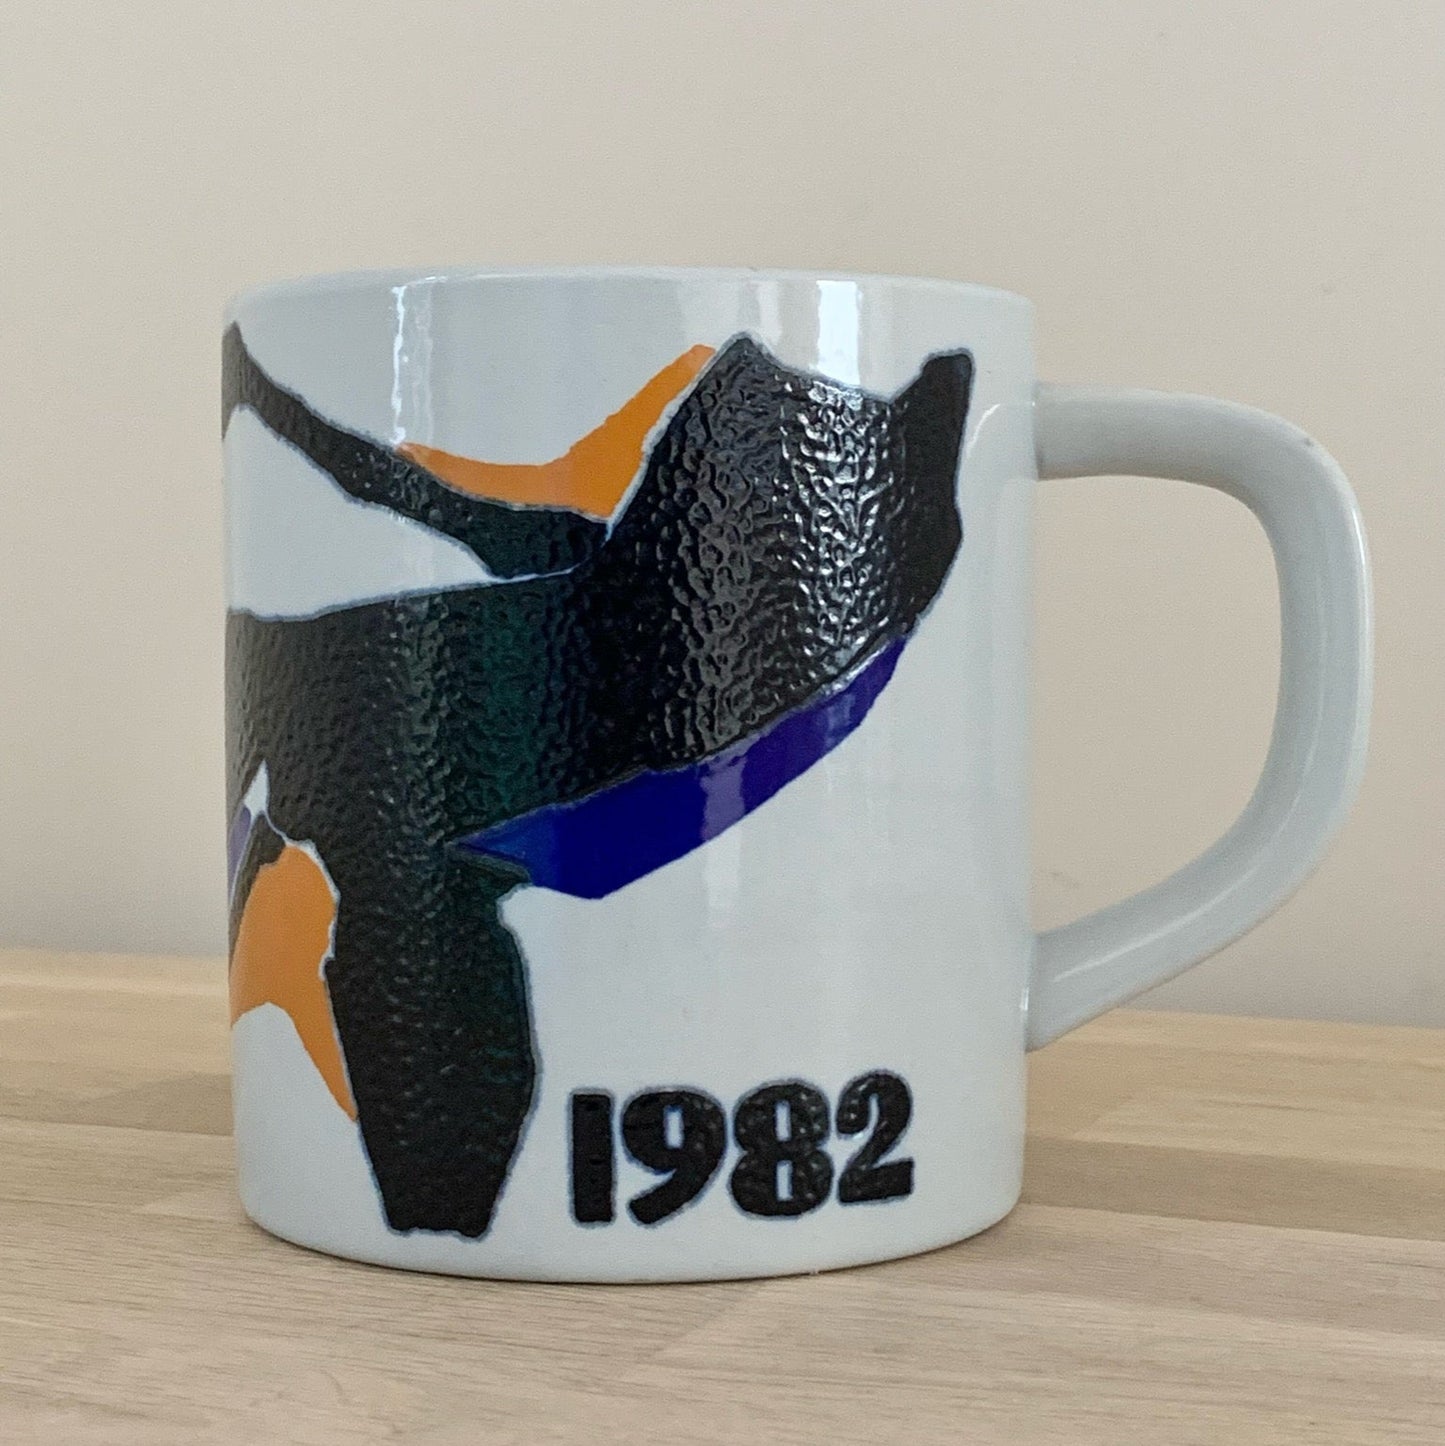 Royal Copenhagen Large Annual Year Cup Mug Danish Gifts Presents Ceramic Pottery Vintage Retro